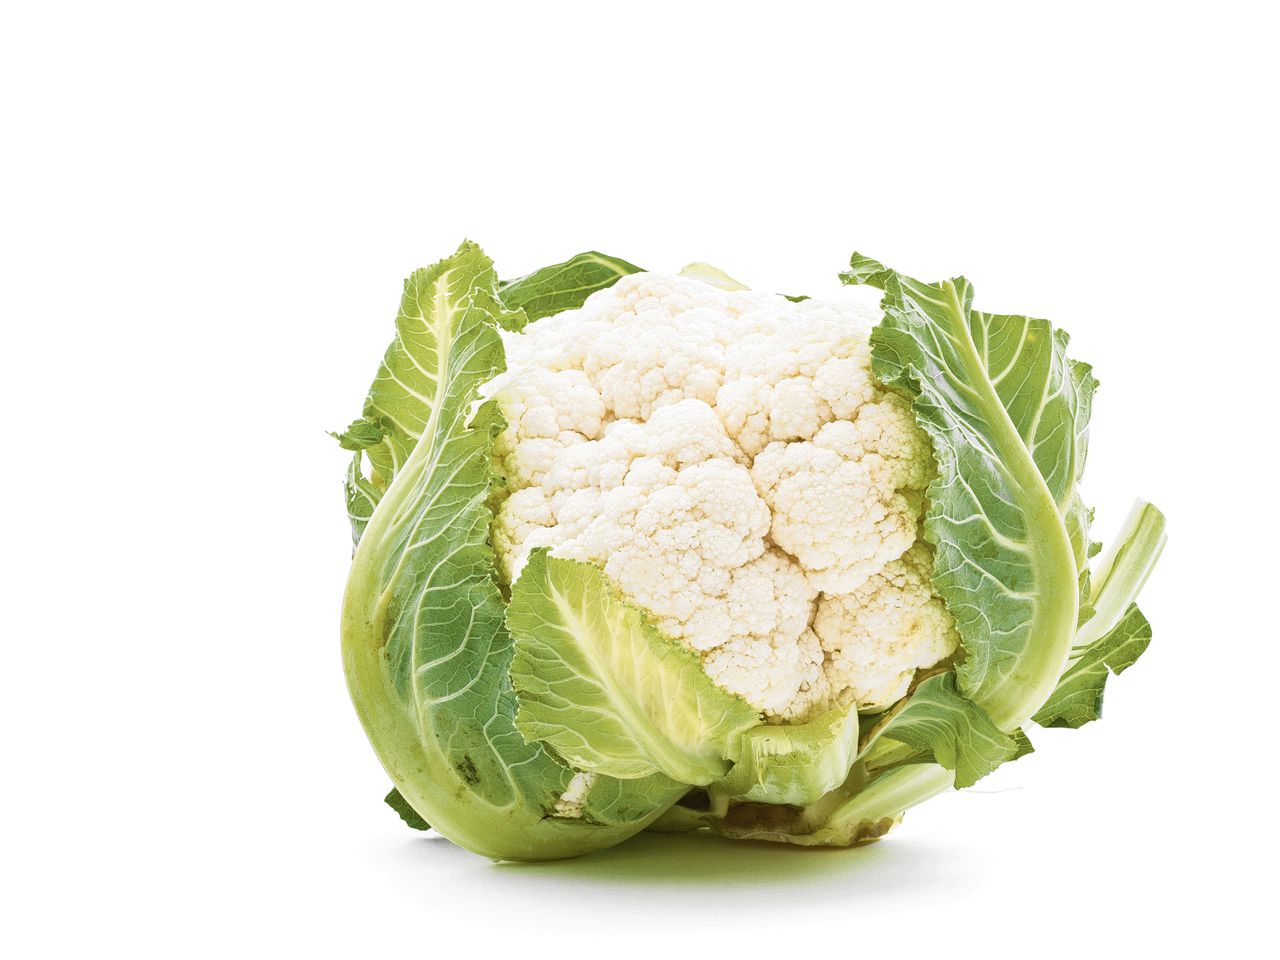 Cauliflower on white background, studio shot